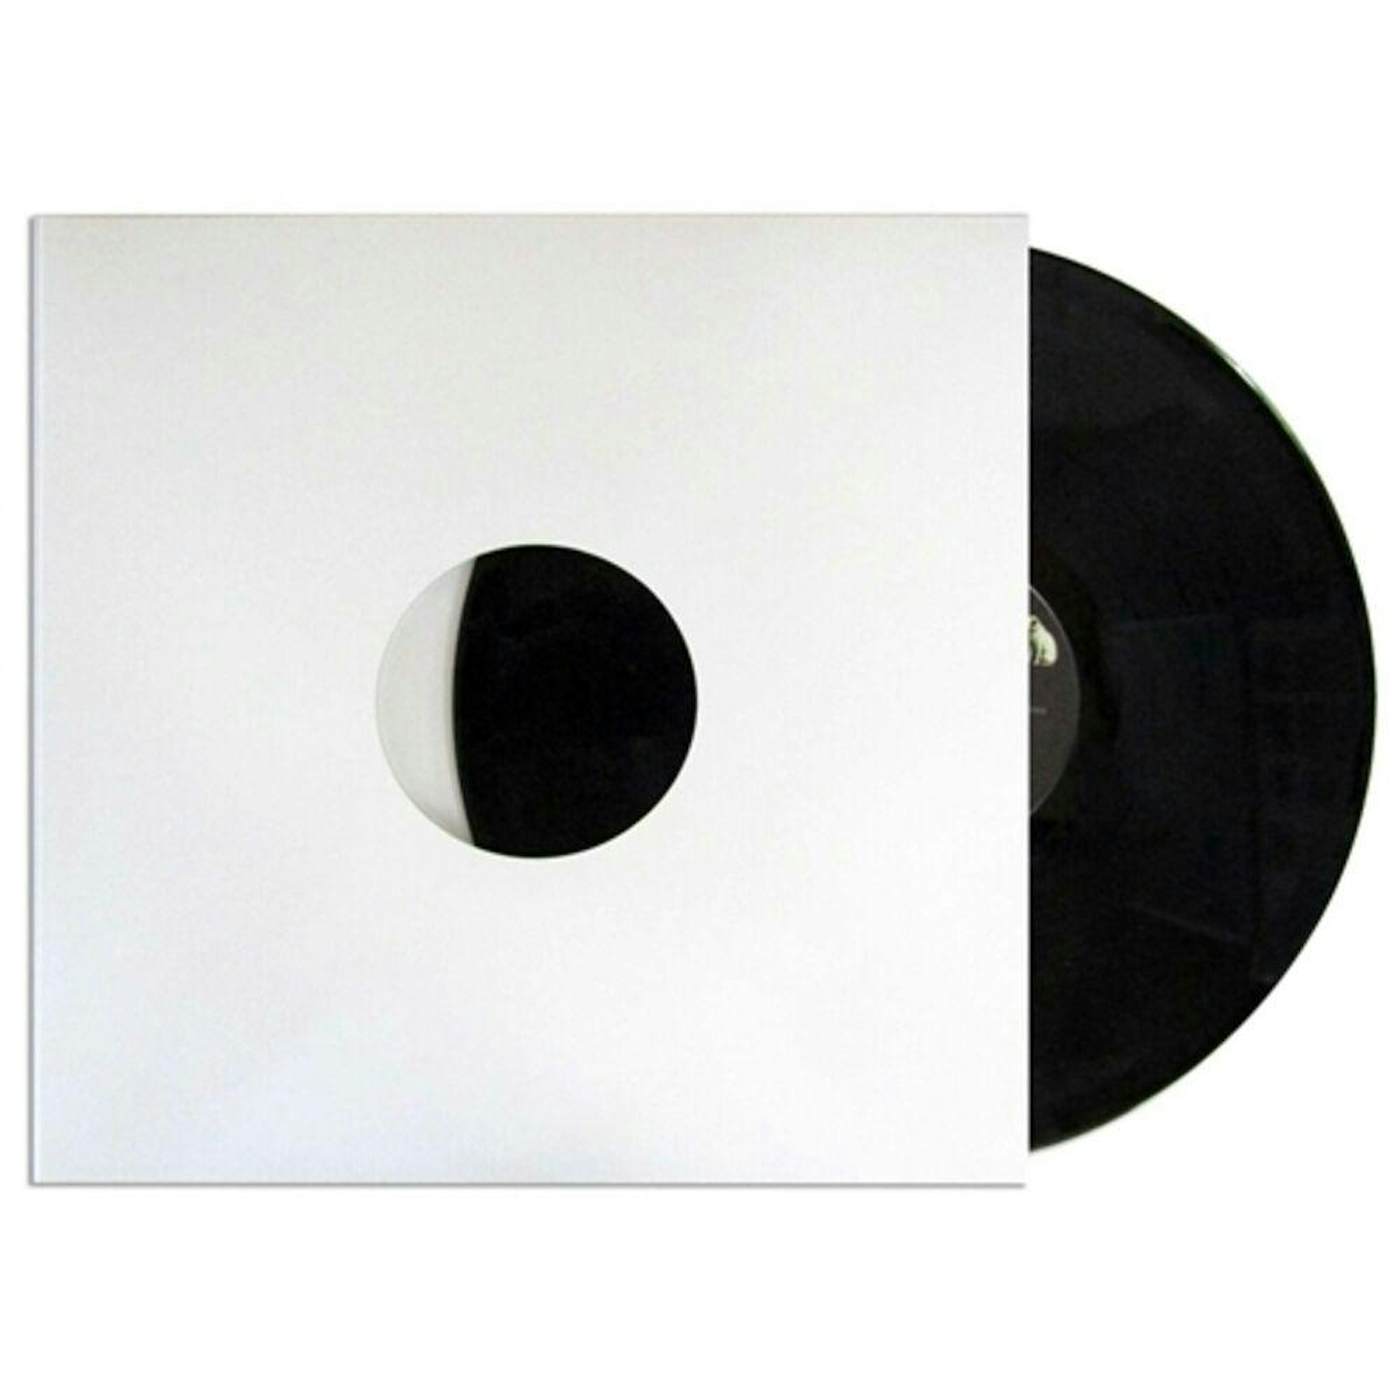 Vinyl accessories BU SLPJHW 12 INCH RECORD JACKET W/HOLE 10PK WHITE